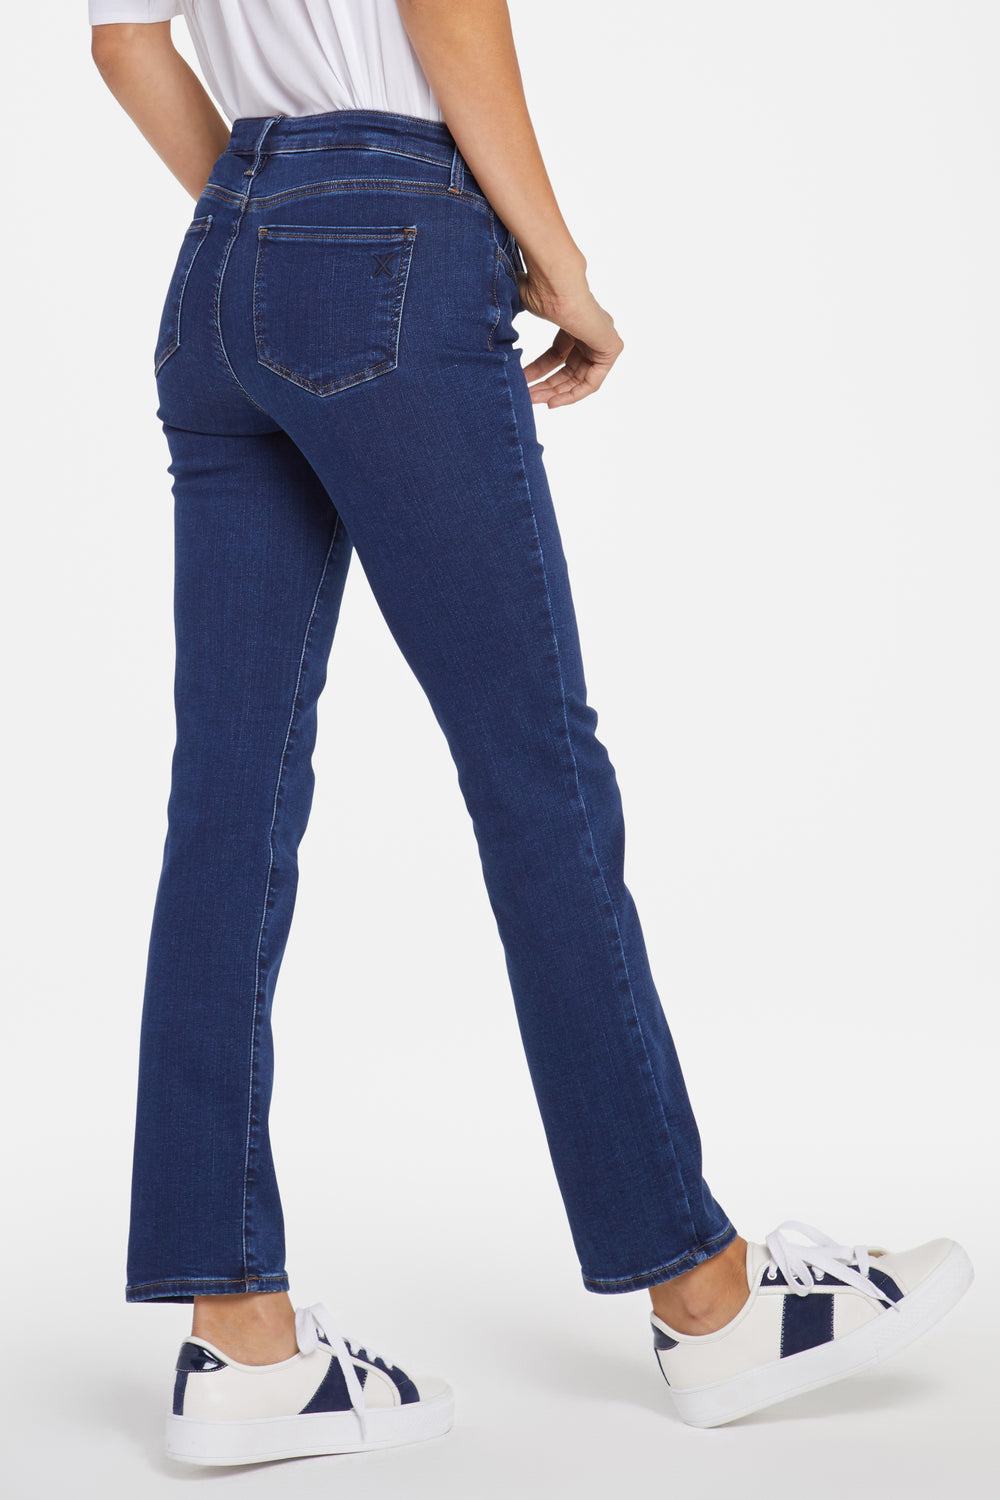 NYDJ Sheri slim jeans (zip) 5 washes